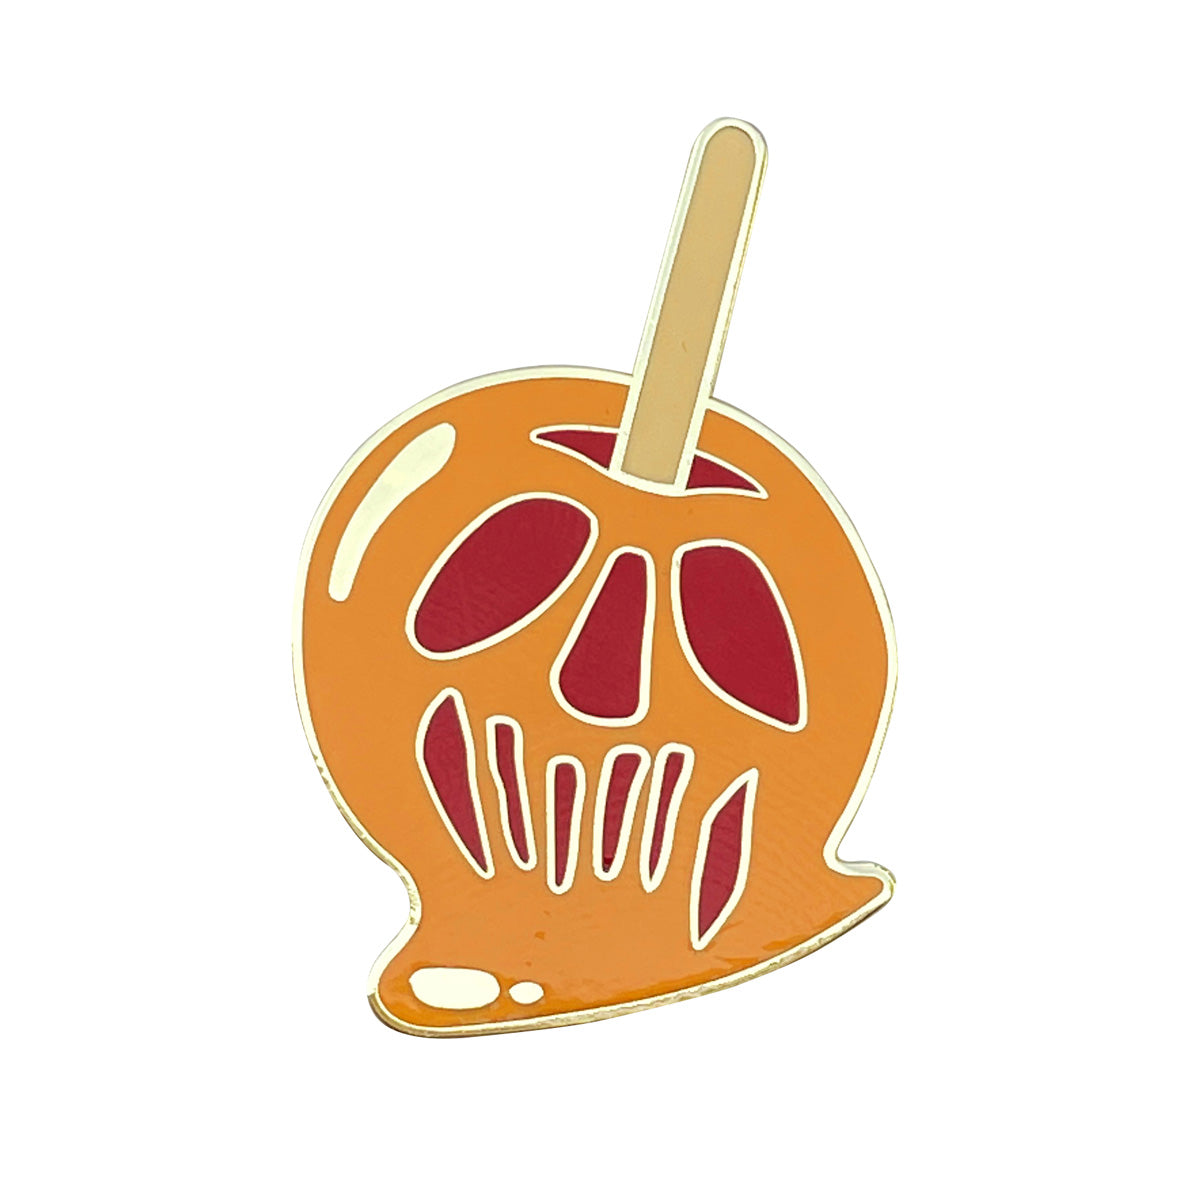 Caramel Poison Apple Pin - Whosits & Whatsits